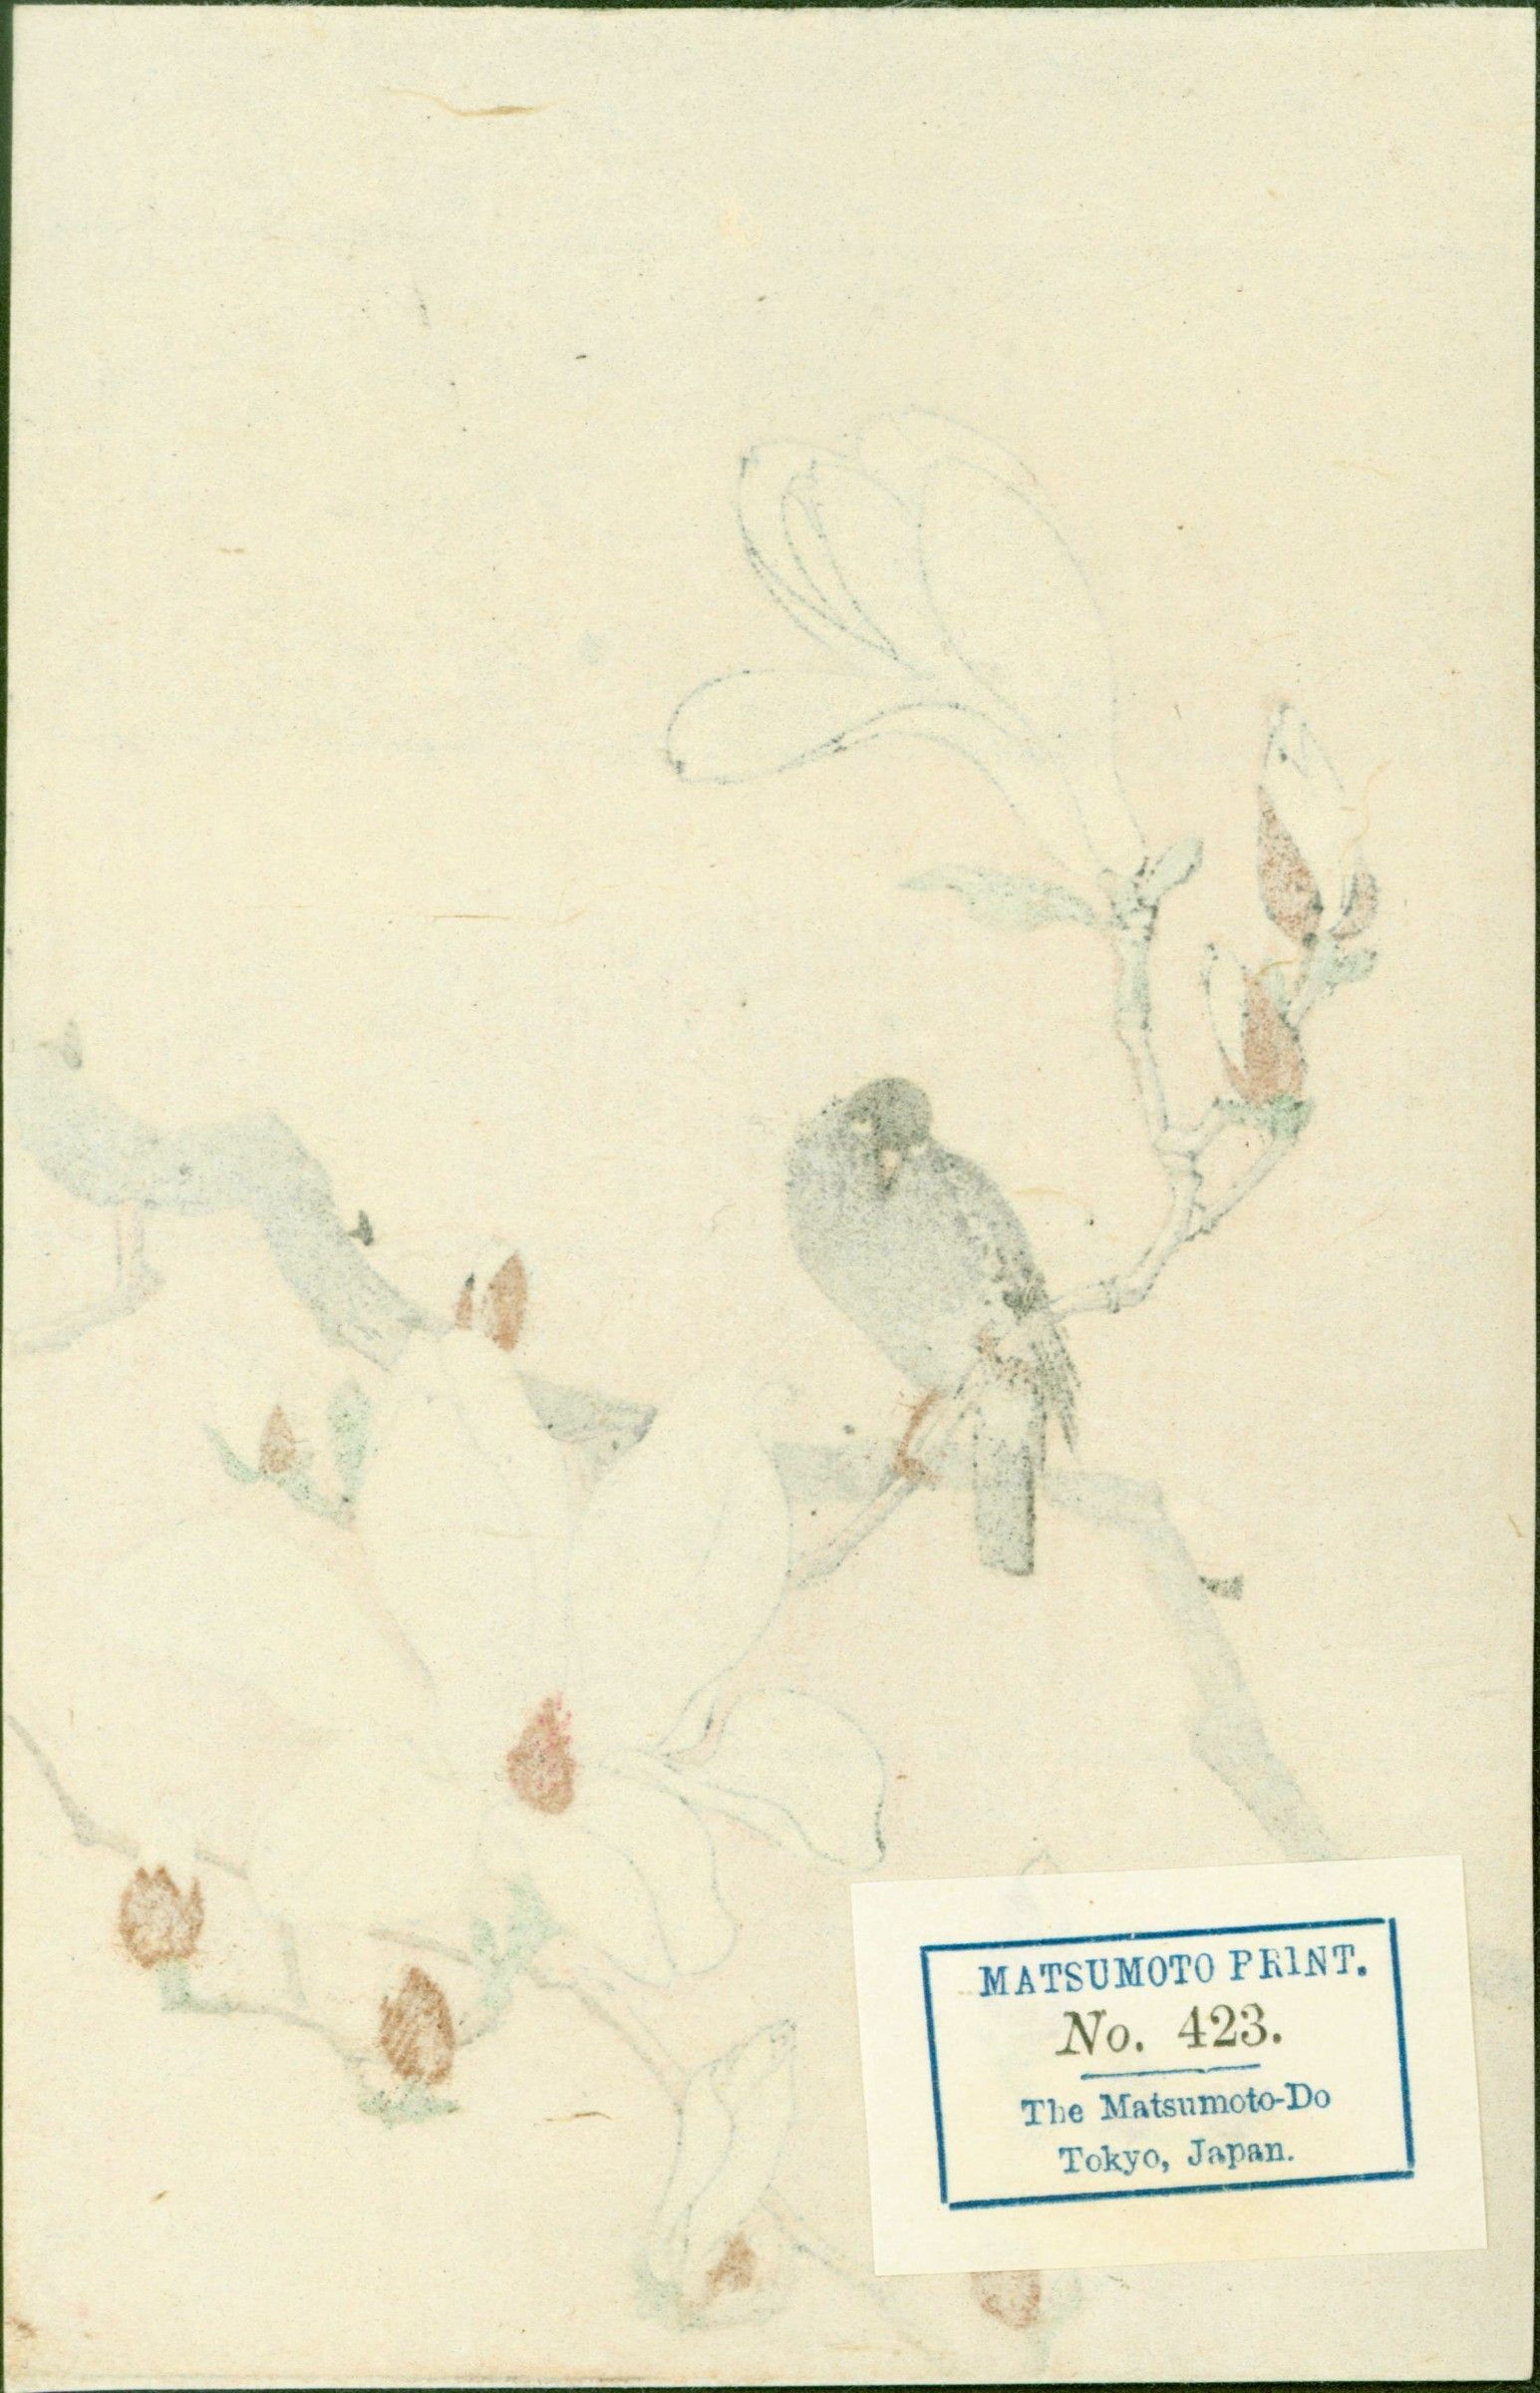 Yamagishi / Ohara Koson Woodblock Print- Bird and Magnolia 1910 SOLD